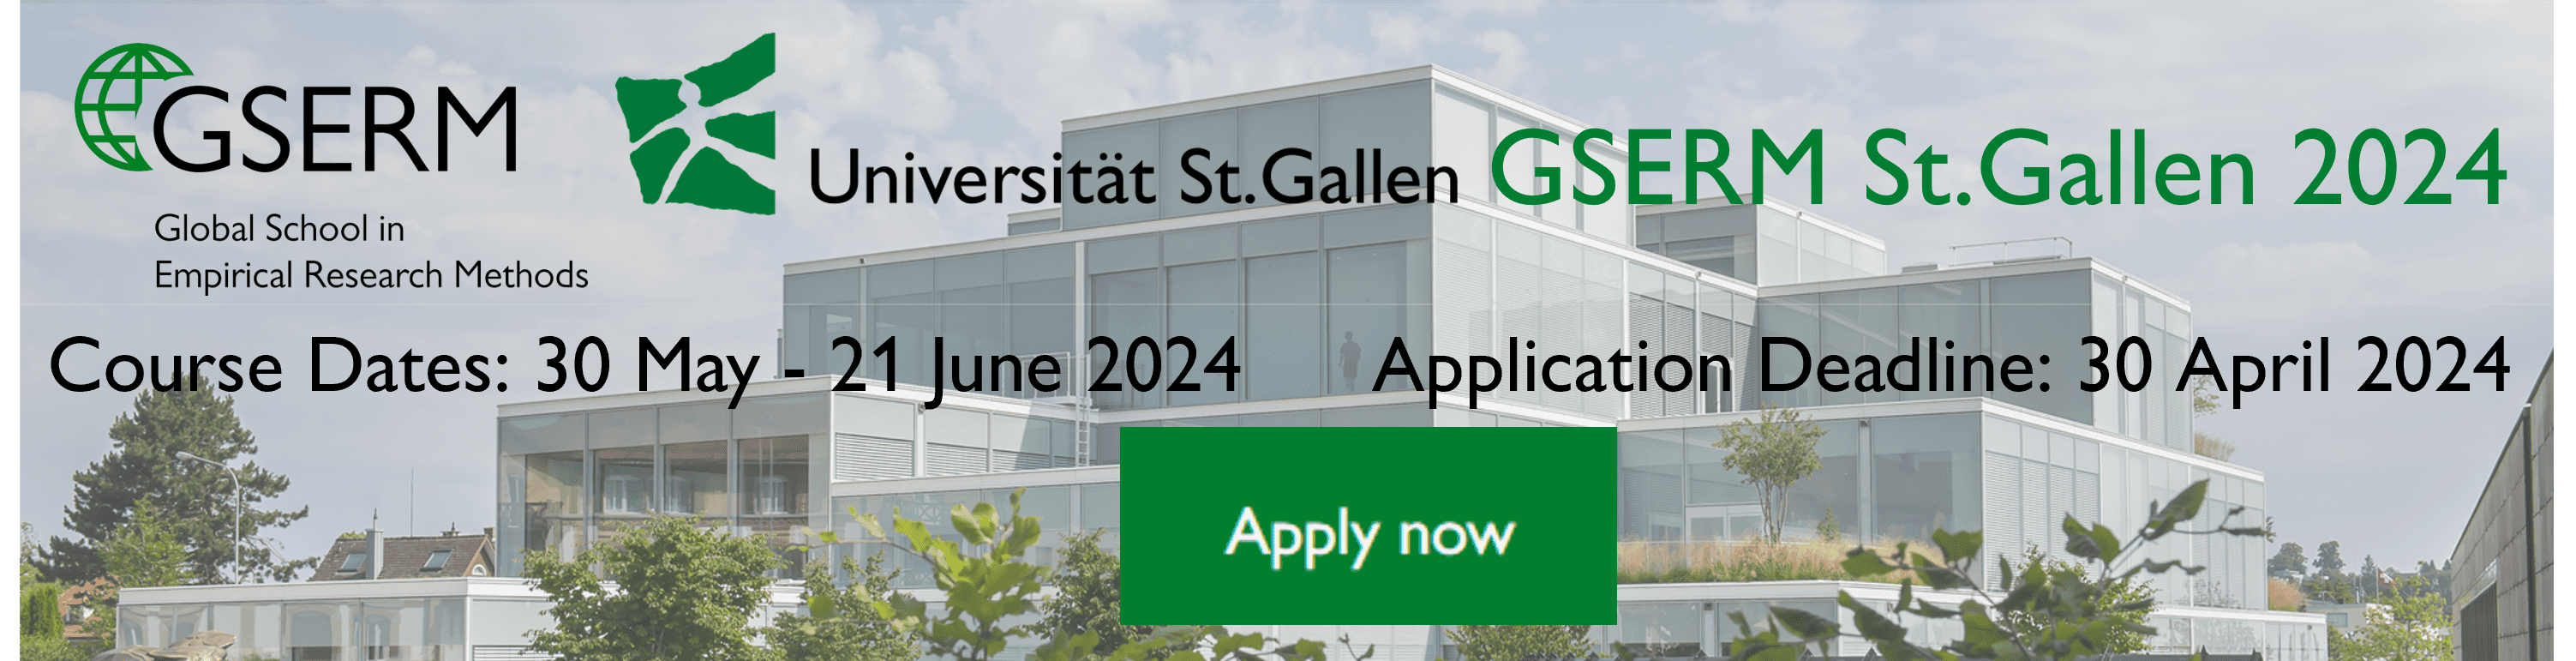 Global School in Empirical Research Methods (GSERM) - University of St. Gallen 2024